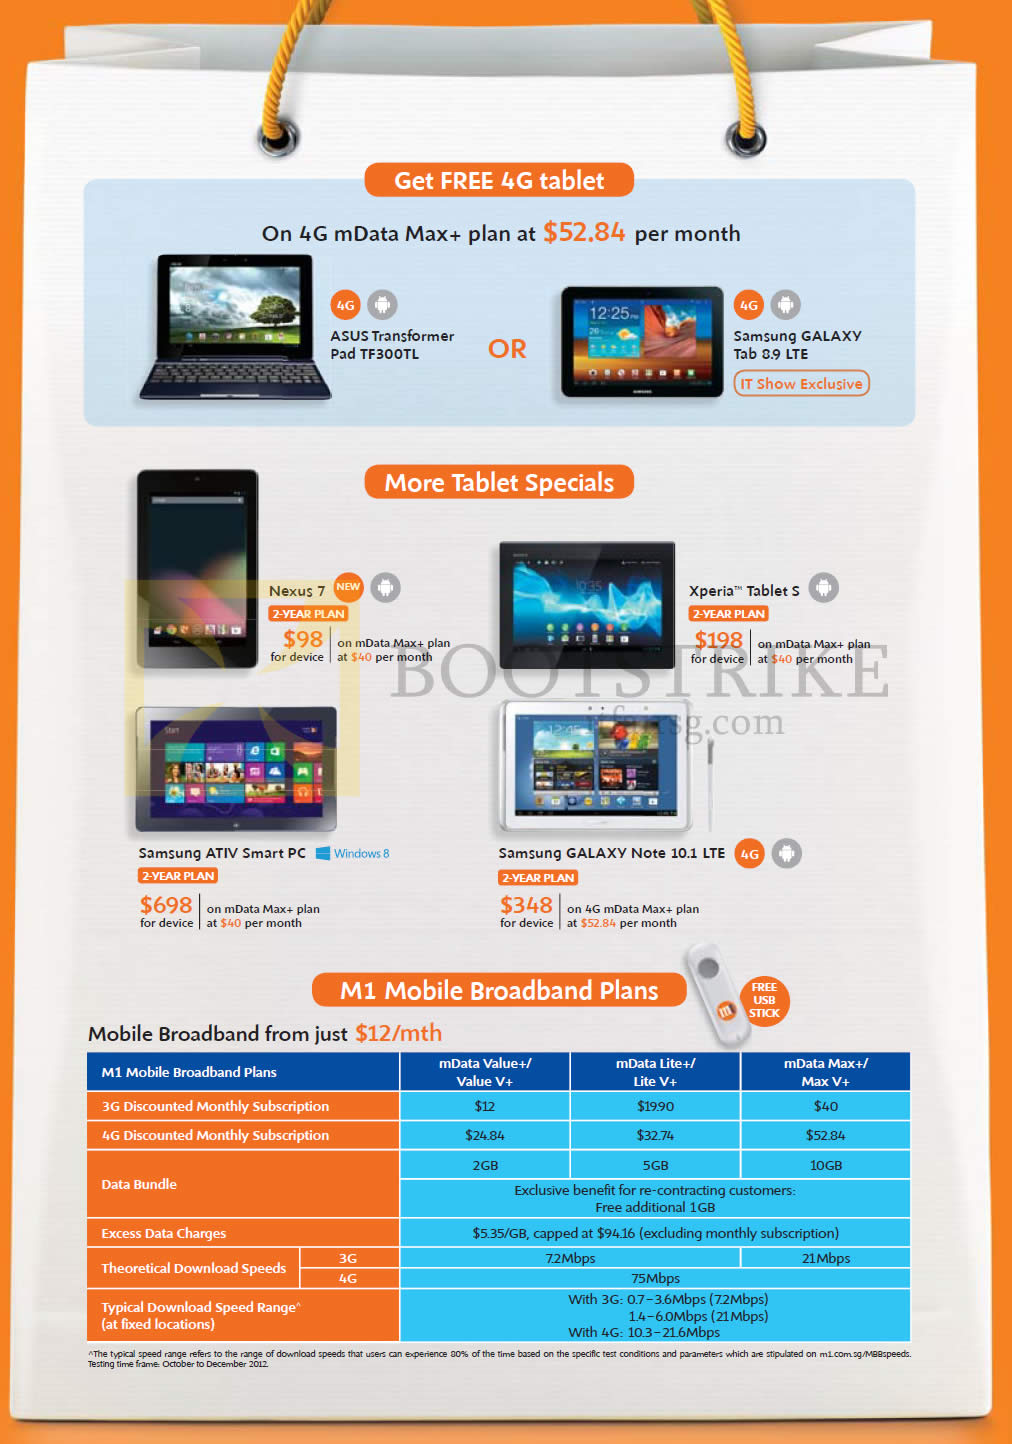 IT SHOW 2013 price list image brochure of M1 Tablets ASUS Transformer Pad TF300TL, Samsung Galaxy Tab 8.9 LTE, Note 10.1 LTE, Nexus 7, Sony Xperia Tablet S, Samsung ATIV Smart PC, Mobile Broadband MData Lite Max